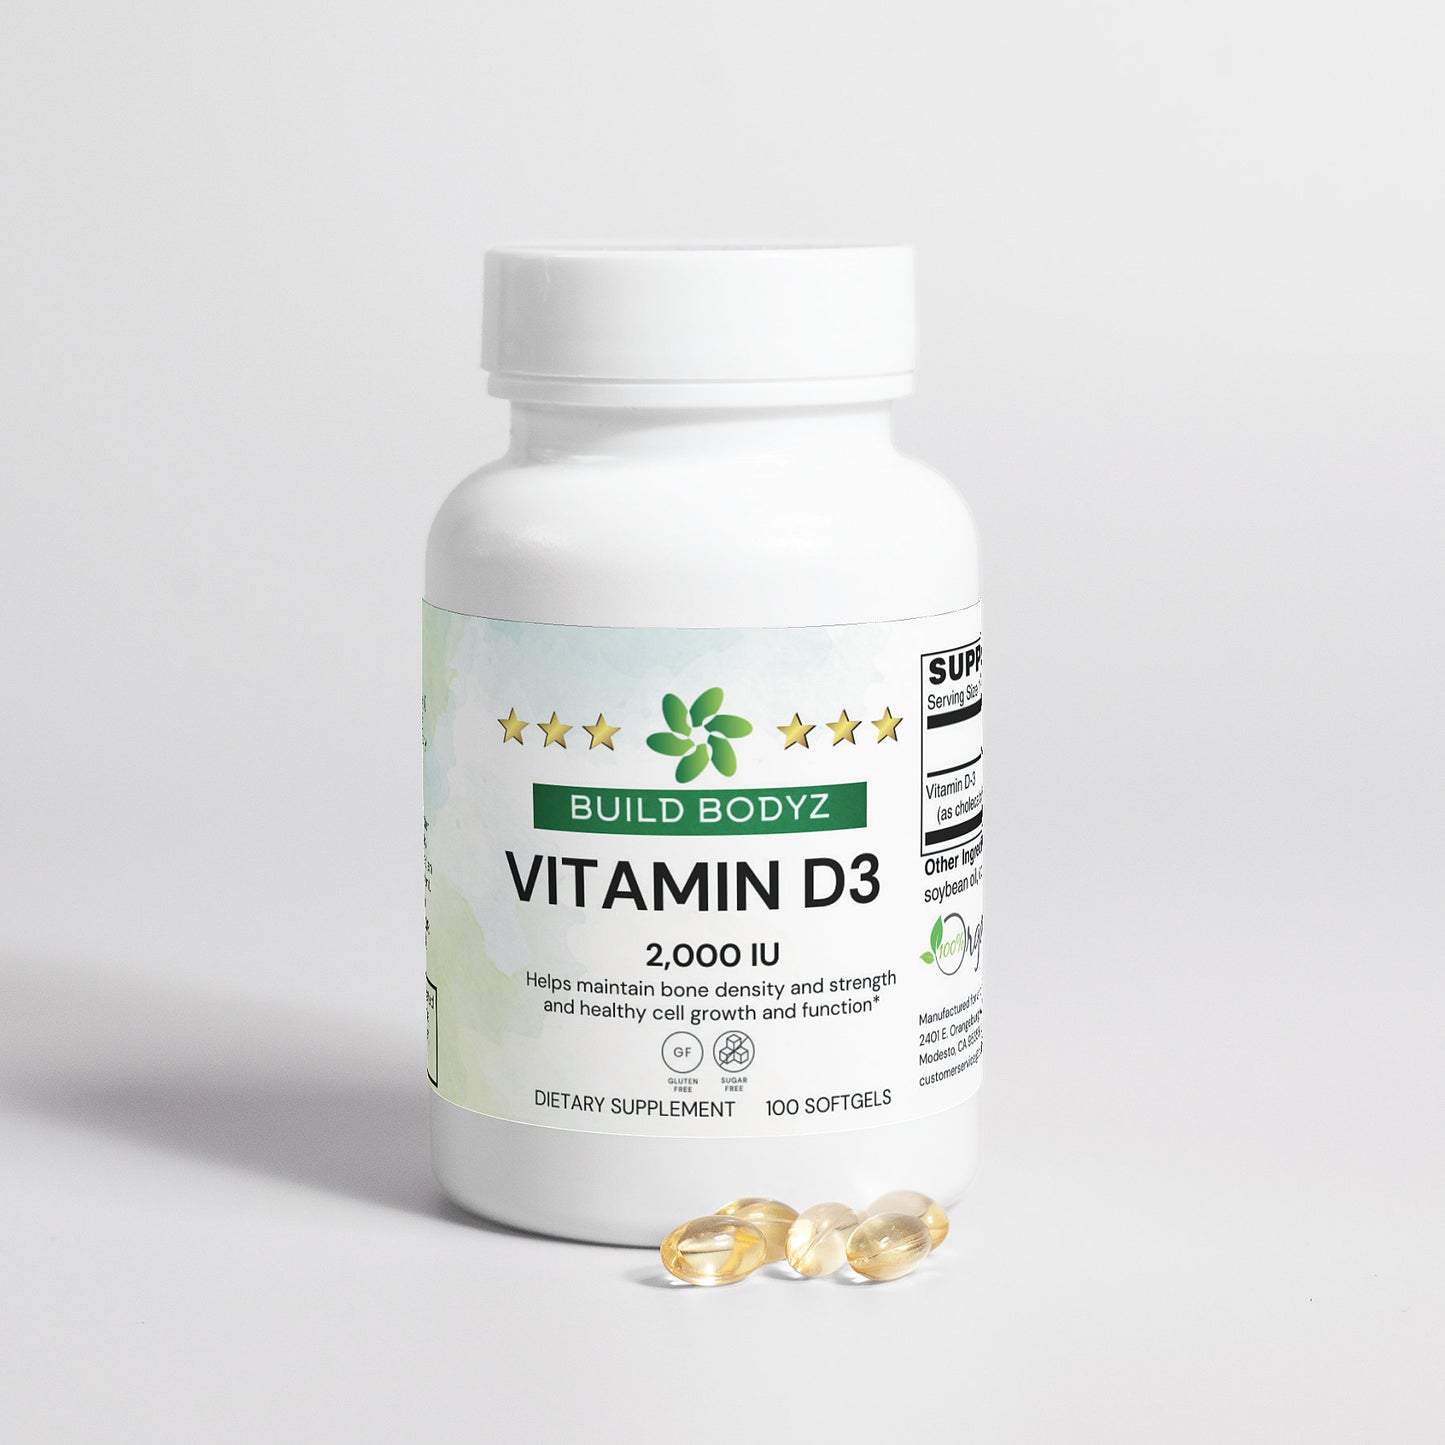 Vitamin D3 (2,000 IU) - Essential for Bone and Muscle Health - 100 Softgels, Gluten-Free